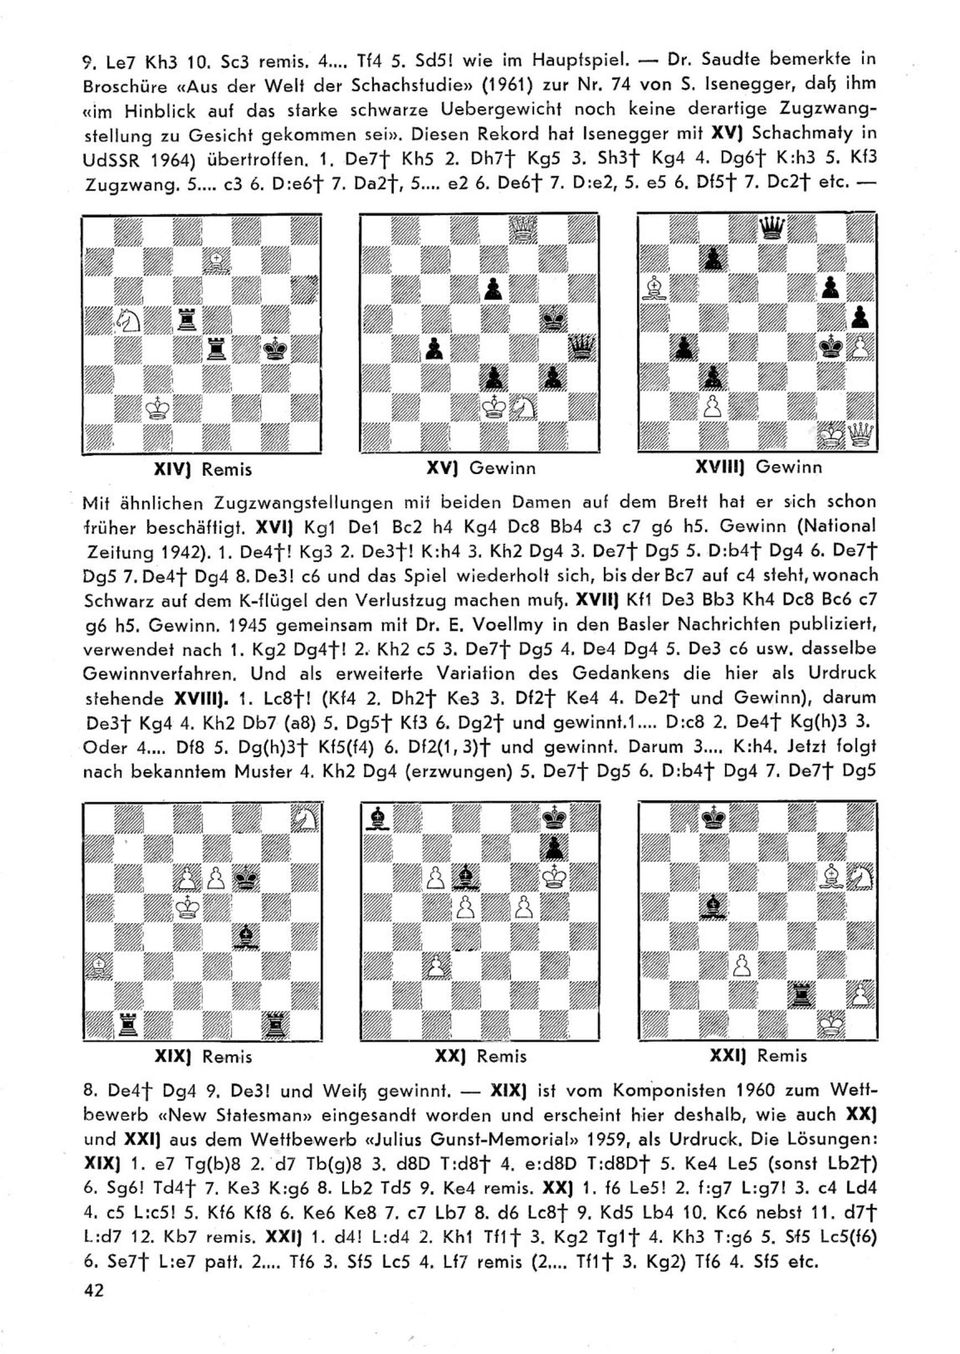 Diesen Rekord hai lsenegger mil XV] Schachmafy in UdSSR 1964) überlroffen. 1. De7 Kh5 2. Dl17 Kg5 3. Sh3 Kg4 4. Dg6 K:h3 5. K13 Zugzwang. 5... c3 6. D:e6 7. Da2, 5... e2 6. De6 7. D:e2, 5. e5 6.